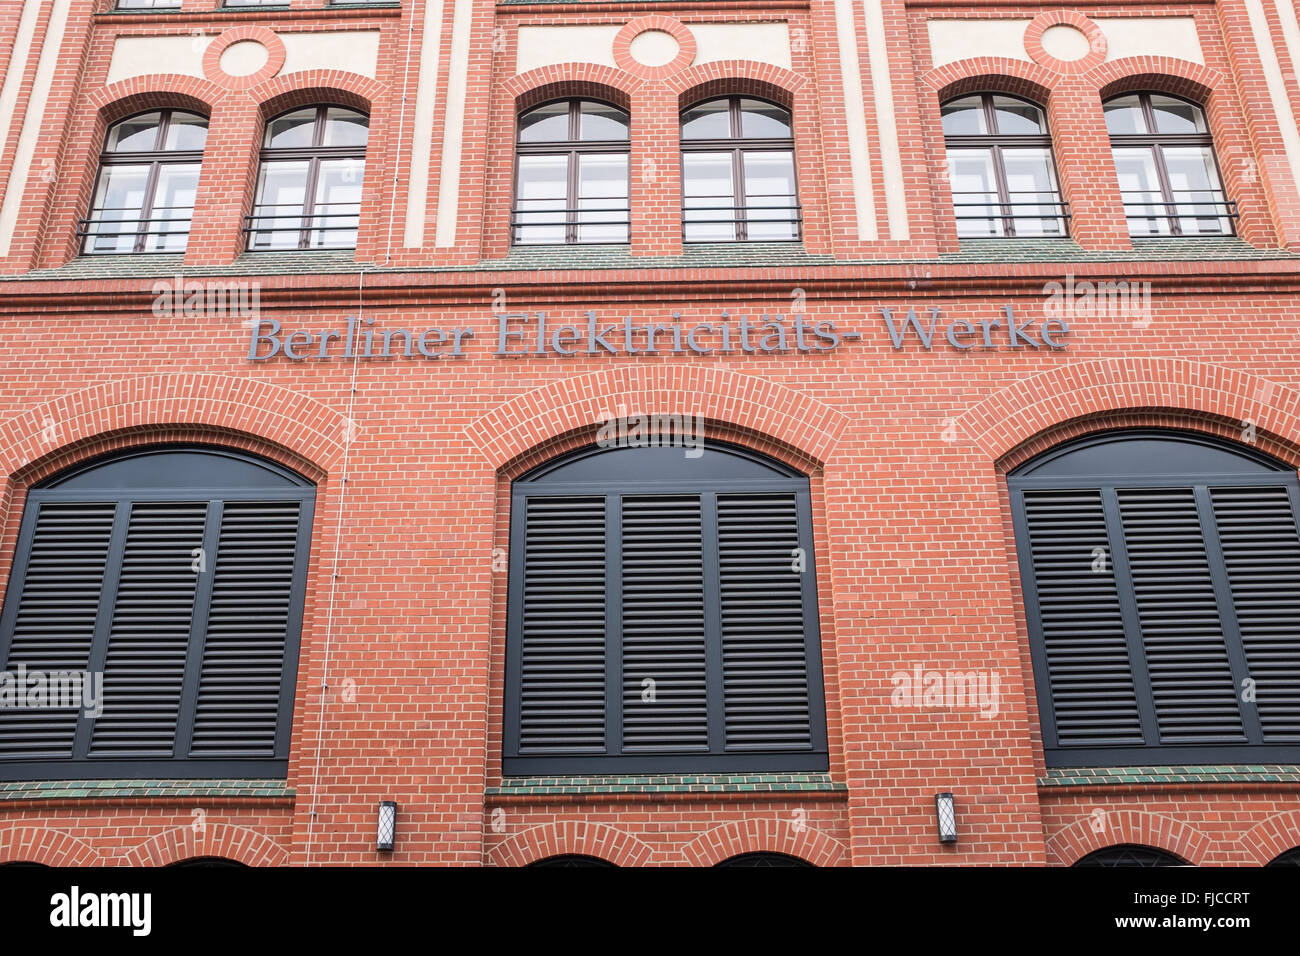 BERLIN FEBRUARY 28: 'Berliner Elektrizitätswerke AG' building Facade in the Auguststrasse on February 28 2016. Stock Photo